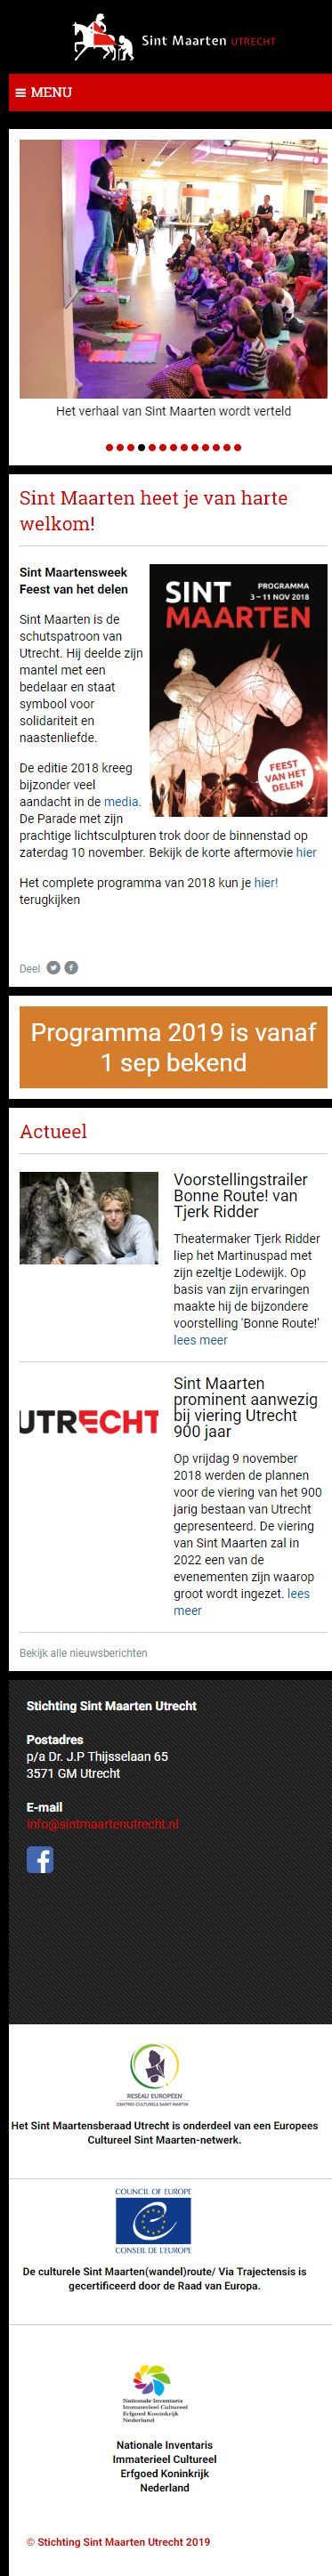 Stichting Sint Maarten Utrecht